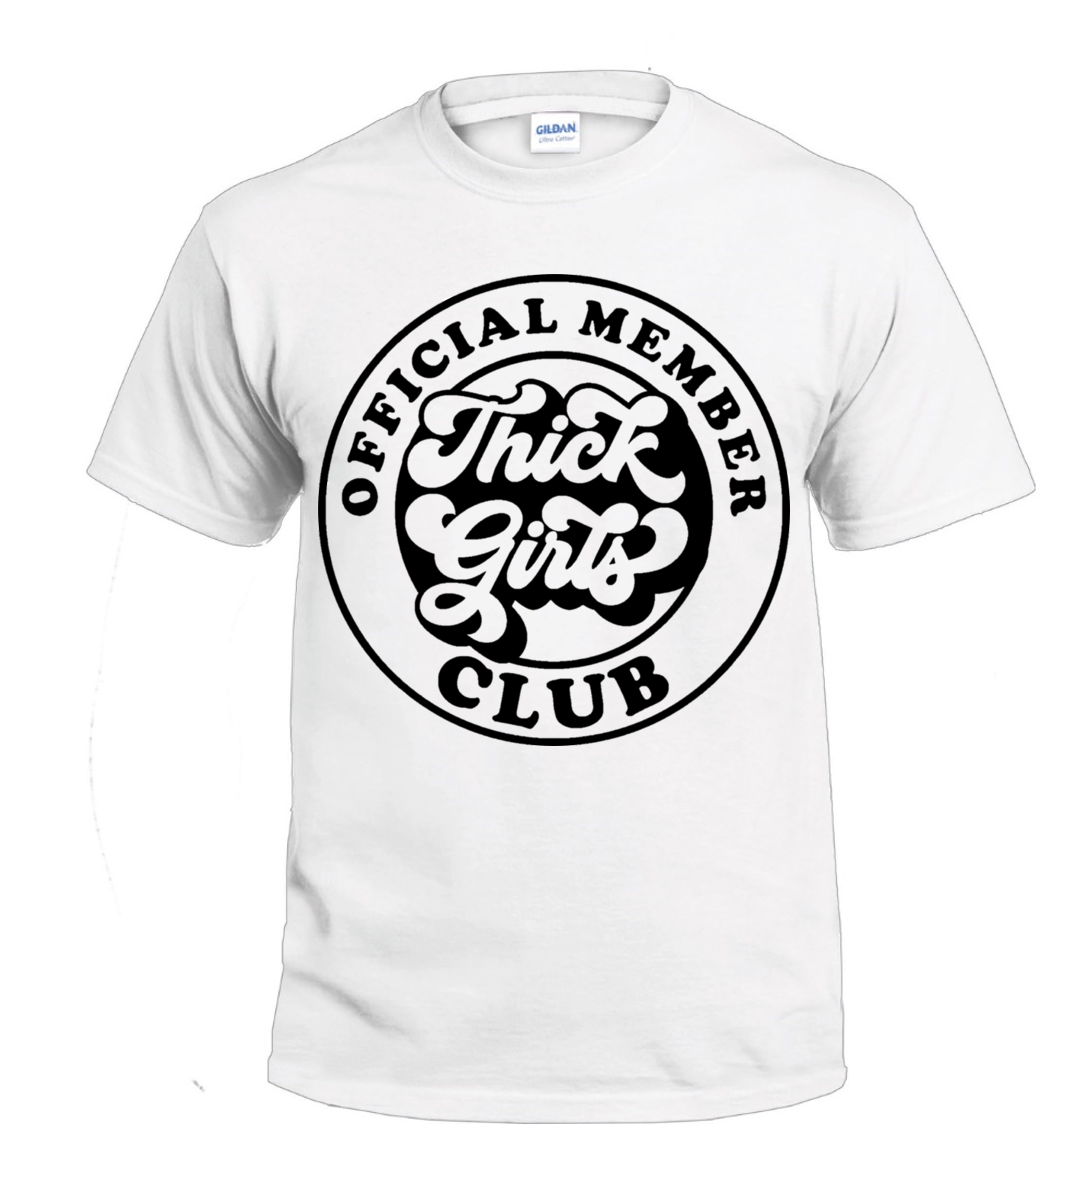 Official Member Thick Girls Club t-shirt